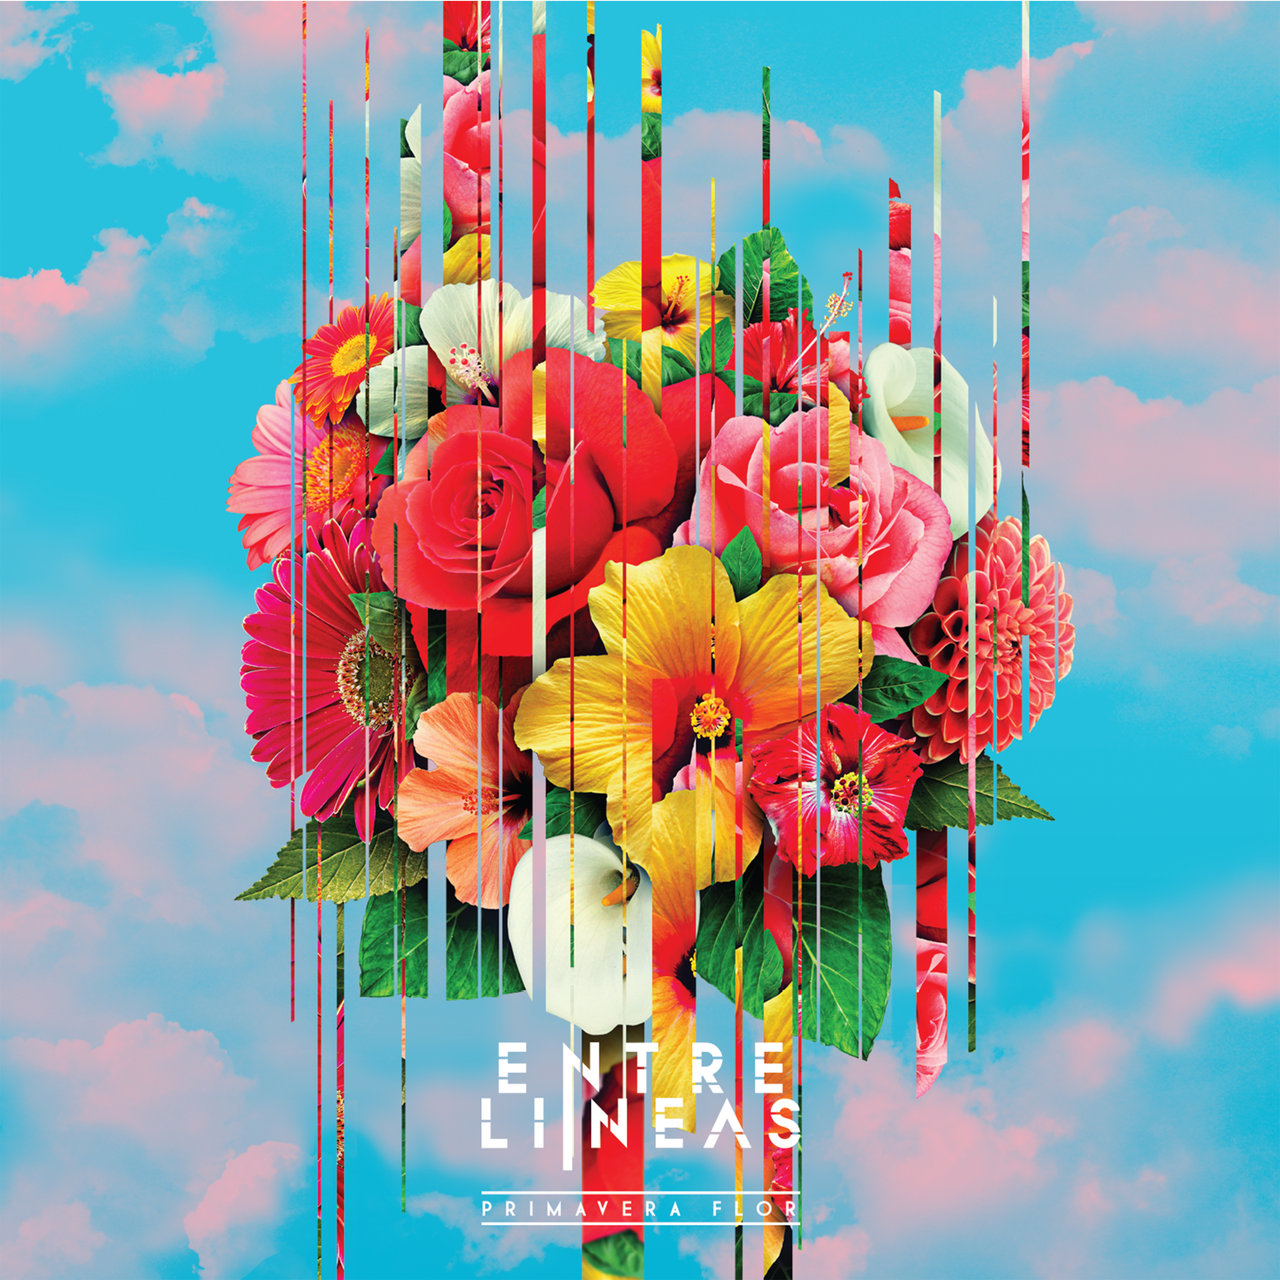 Entrelineas Primavera Flor cover artwork